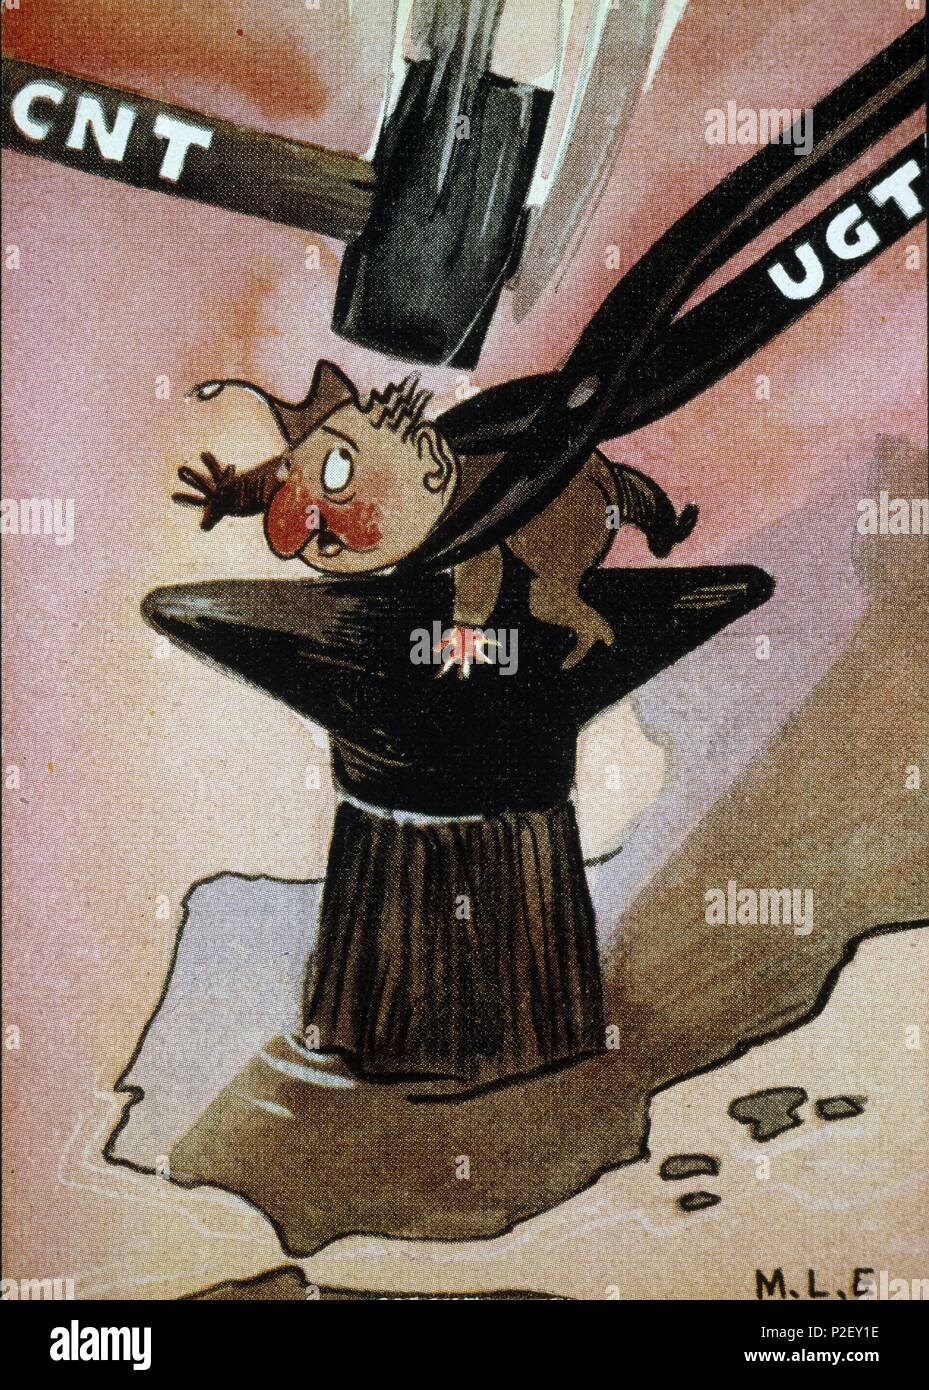 Cartel satírico de la CNT-UGT. Editado en Francia.  Zona Republicana. Año 1937. Guerra civil 1936-1939. Stock Photo